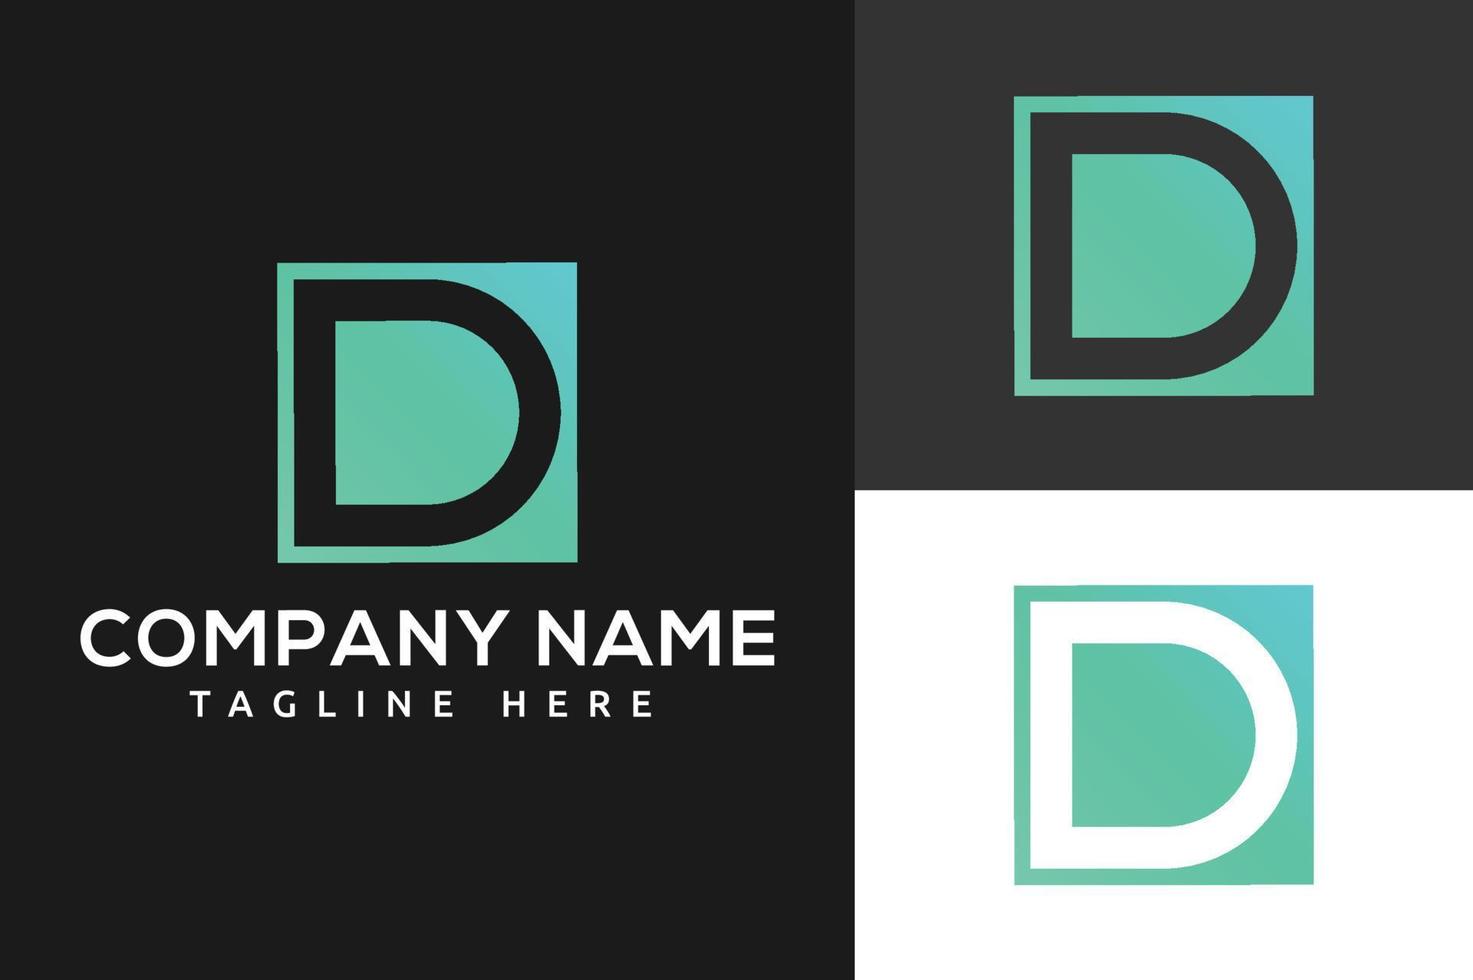 D letter vector logo. Material design, flat, line art style .D gradient alphabet letter logo for branding and business. Gradient design for creative use in icon lettering